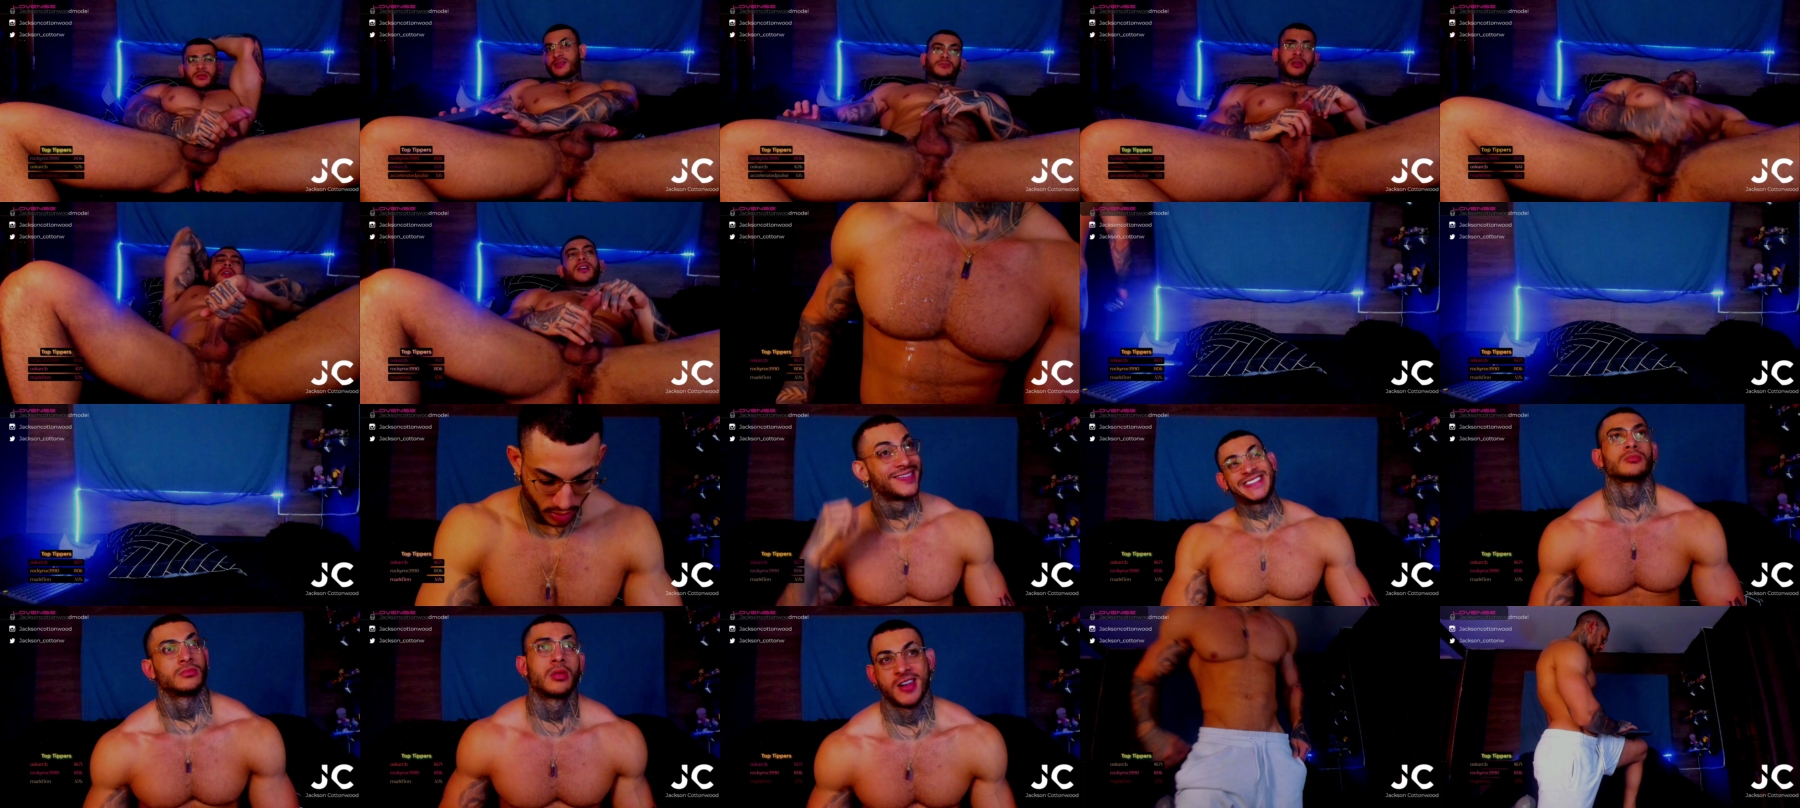 Jackson__Cottonwood  14-07-2021 Male Topless